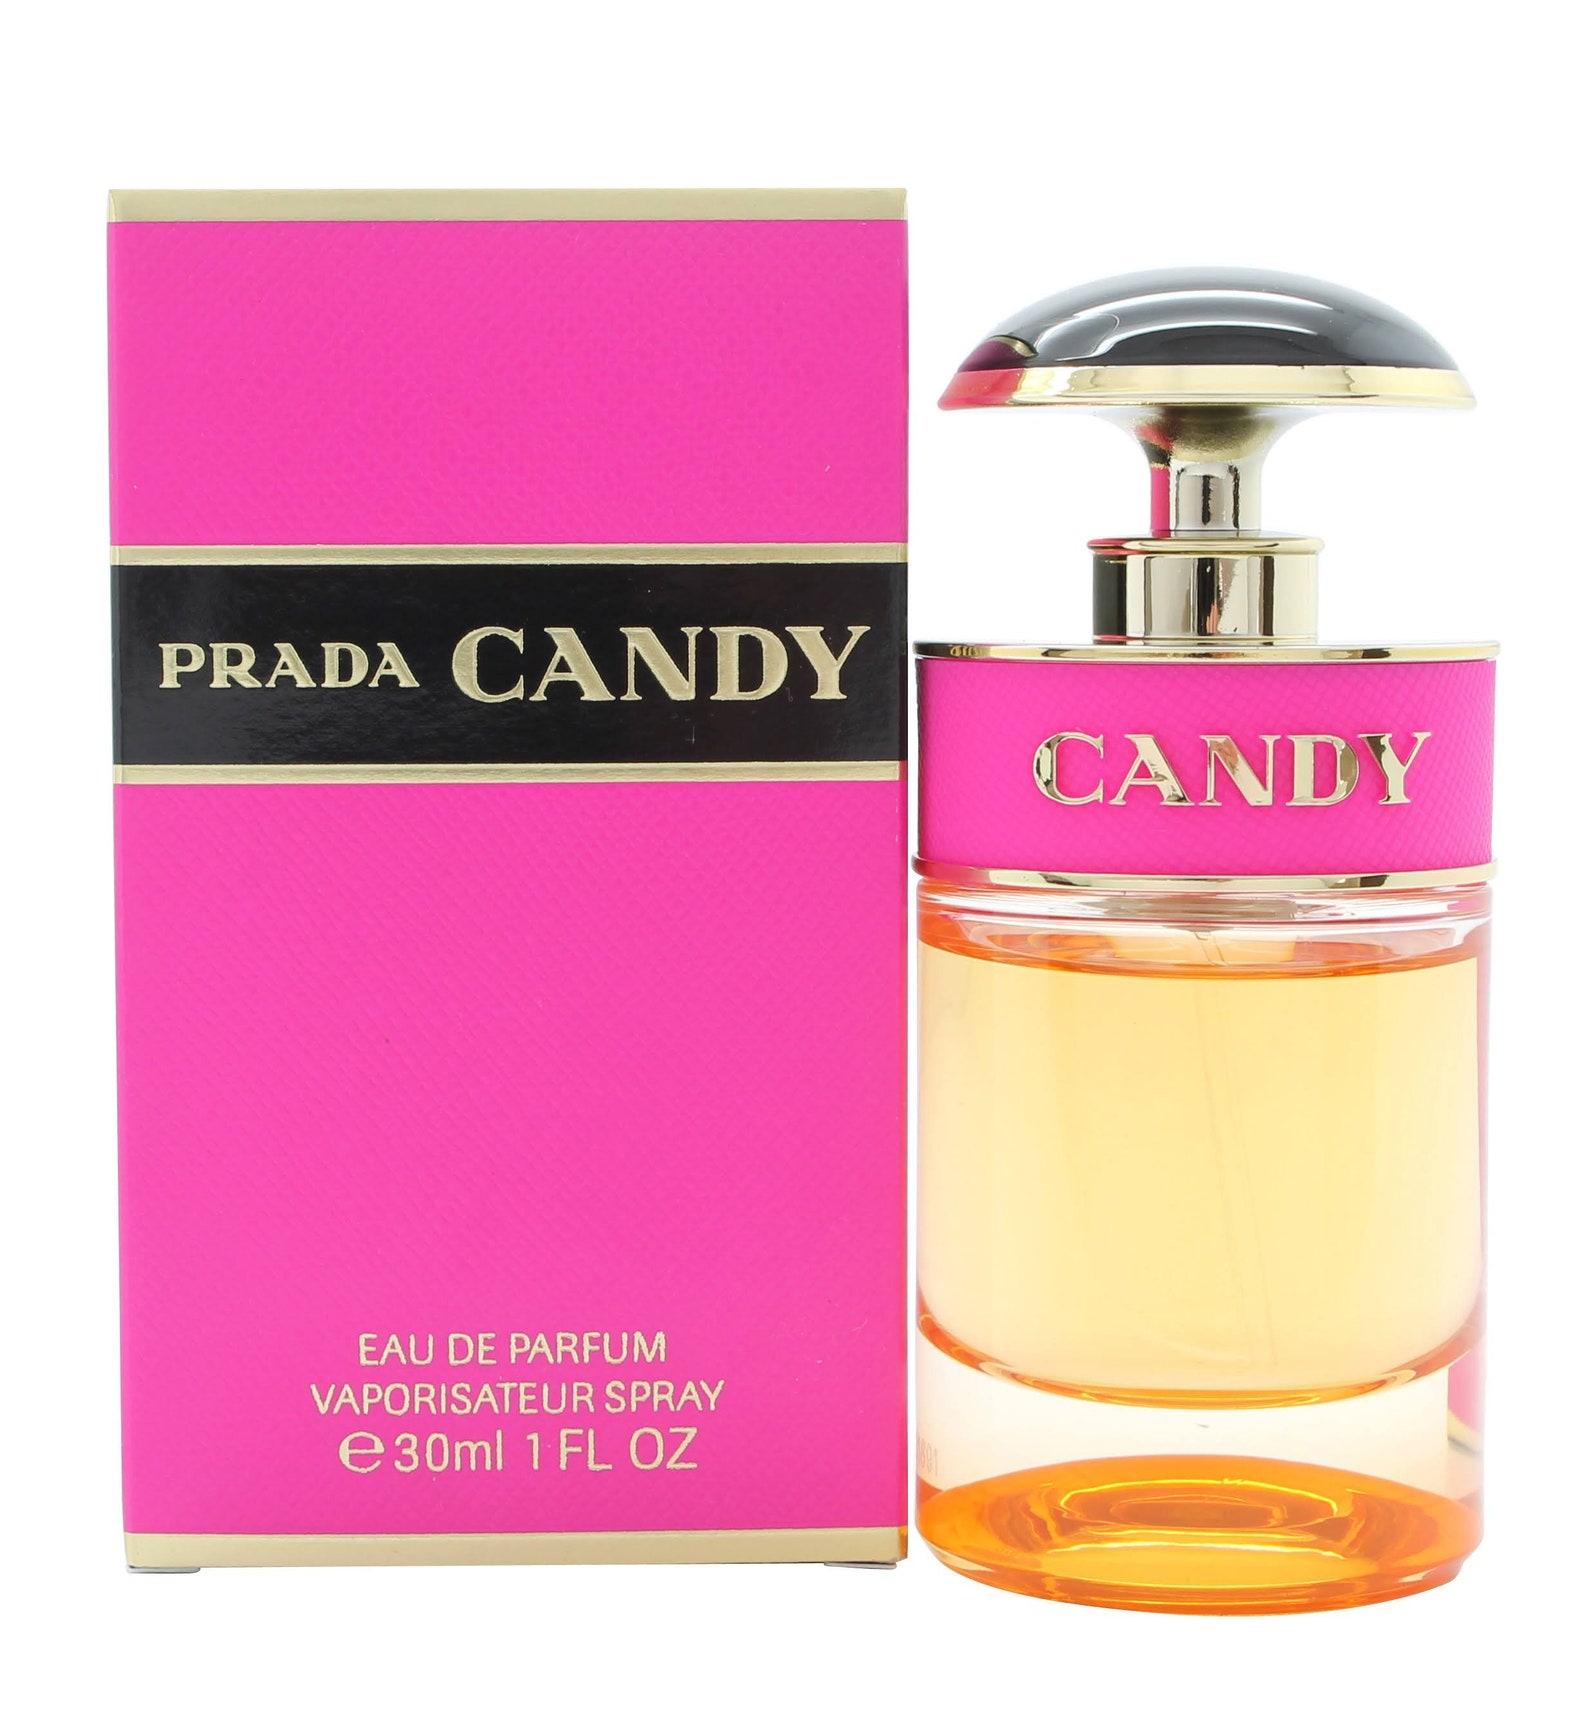 Prada Candy Perfume 8ml Travel Sized Bottle | Etsy